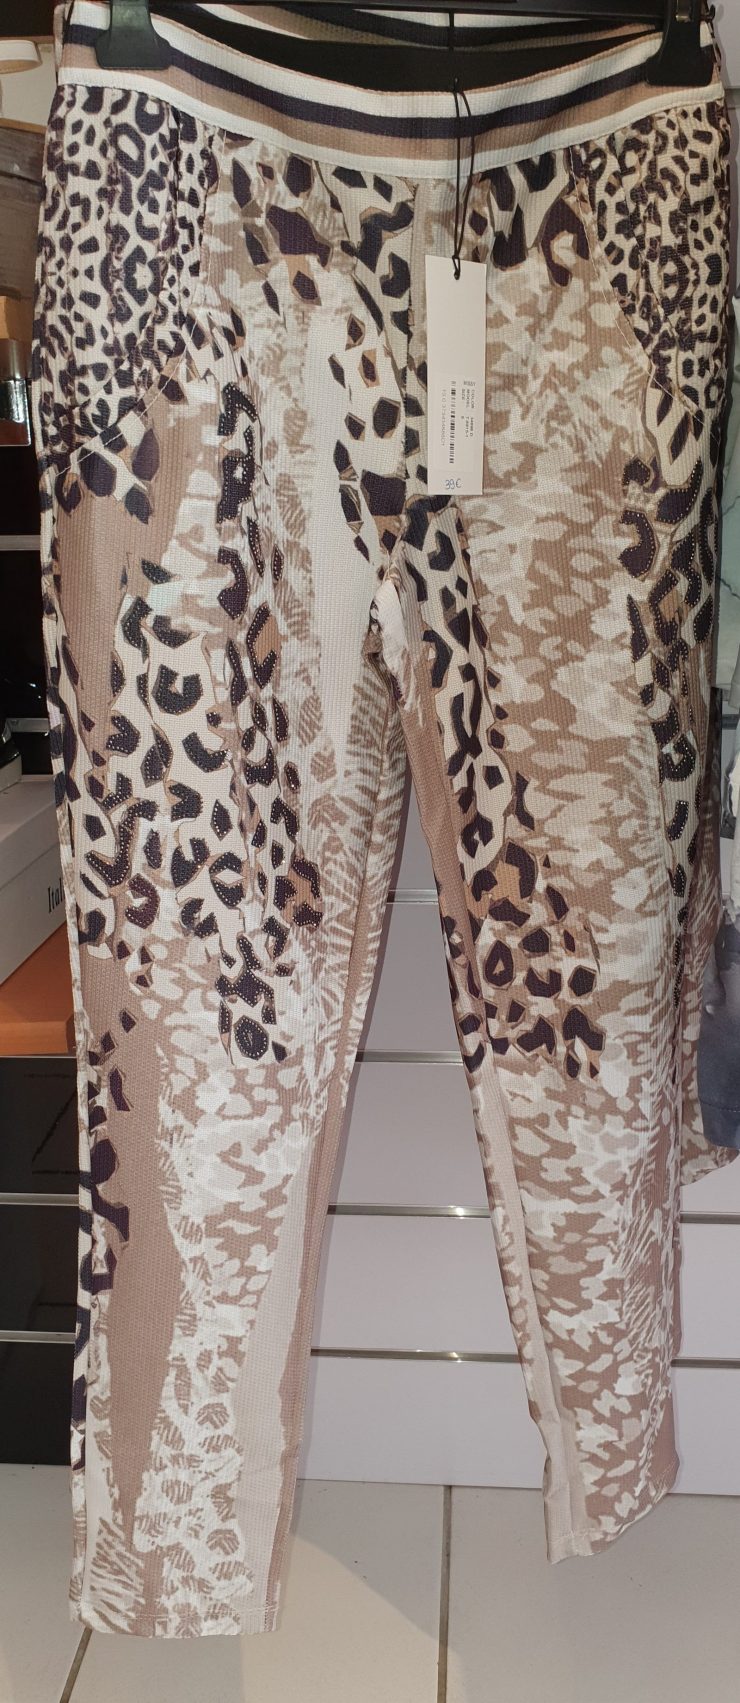 Pantalon leopard